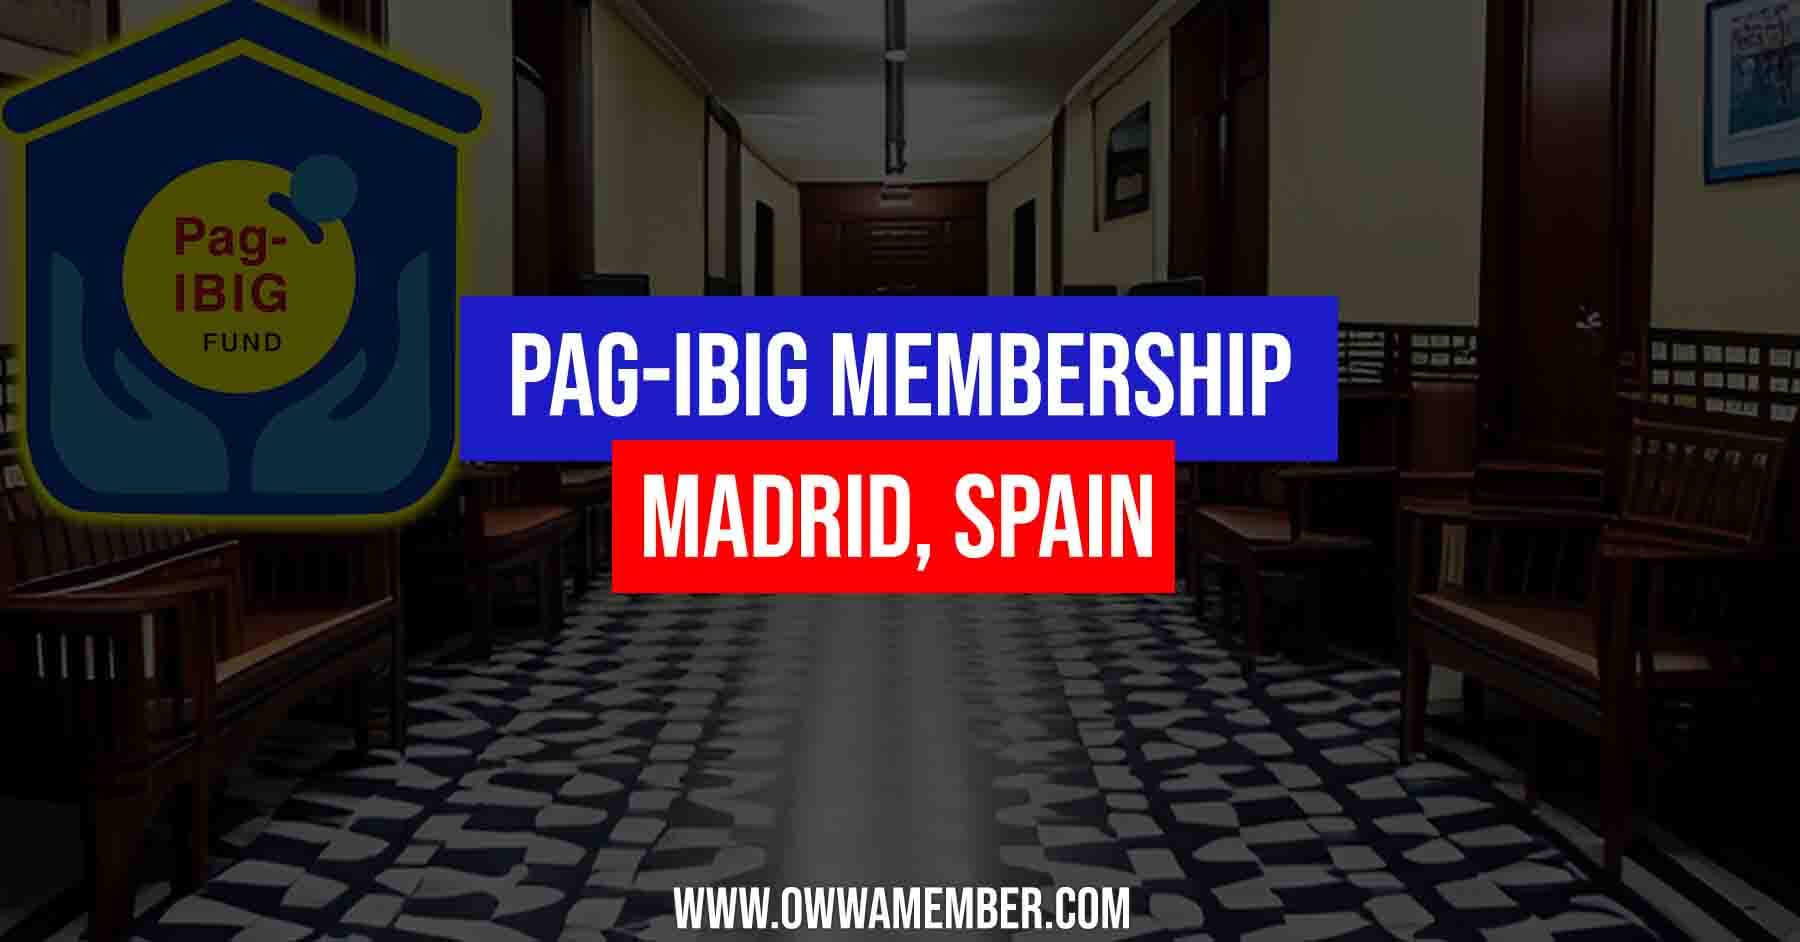 pagibig membership for ofws in madrid spain